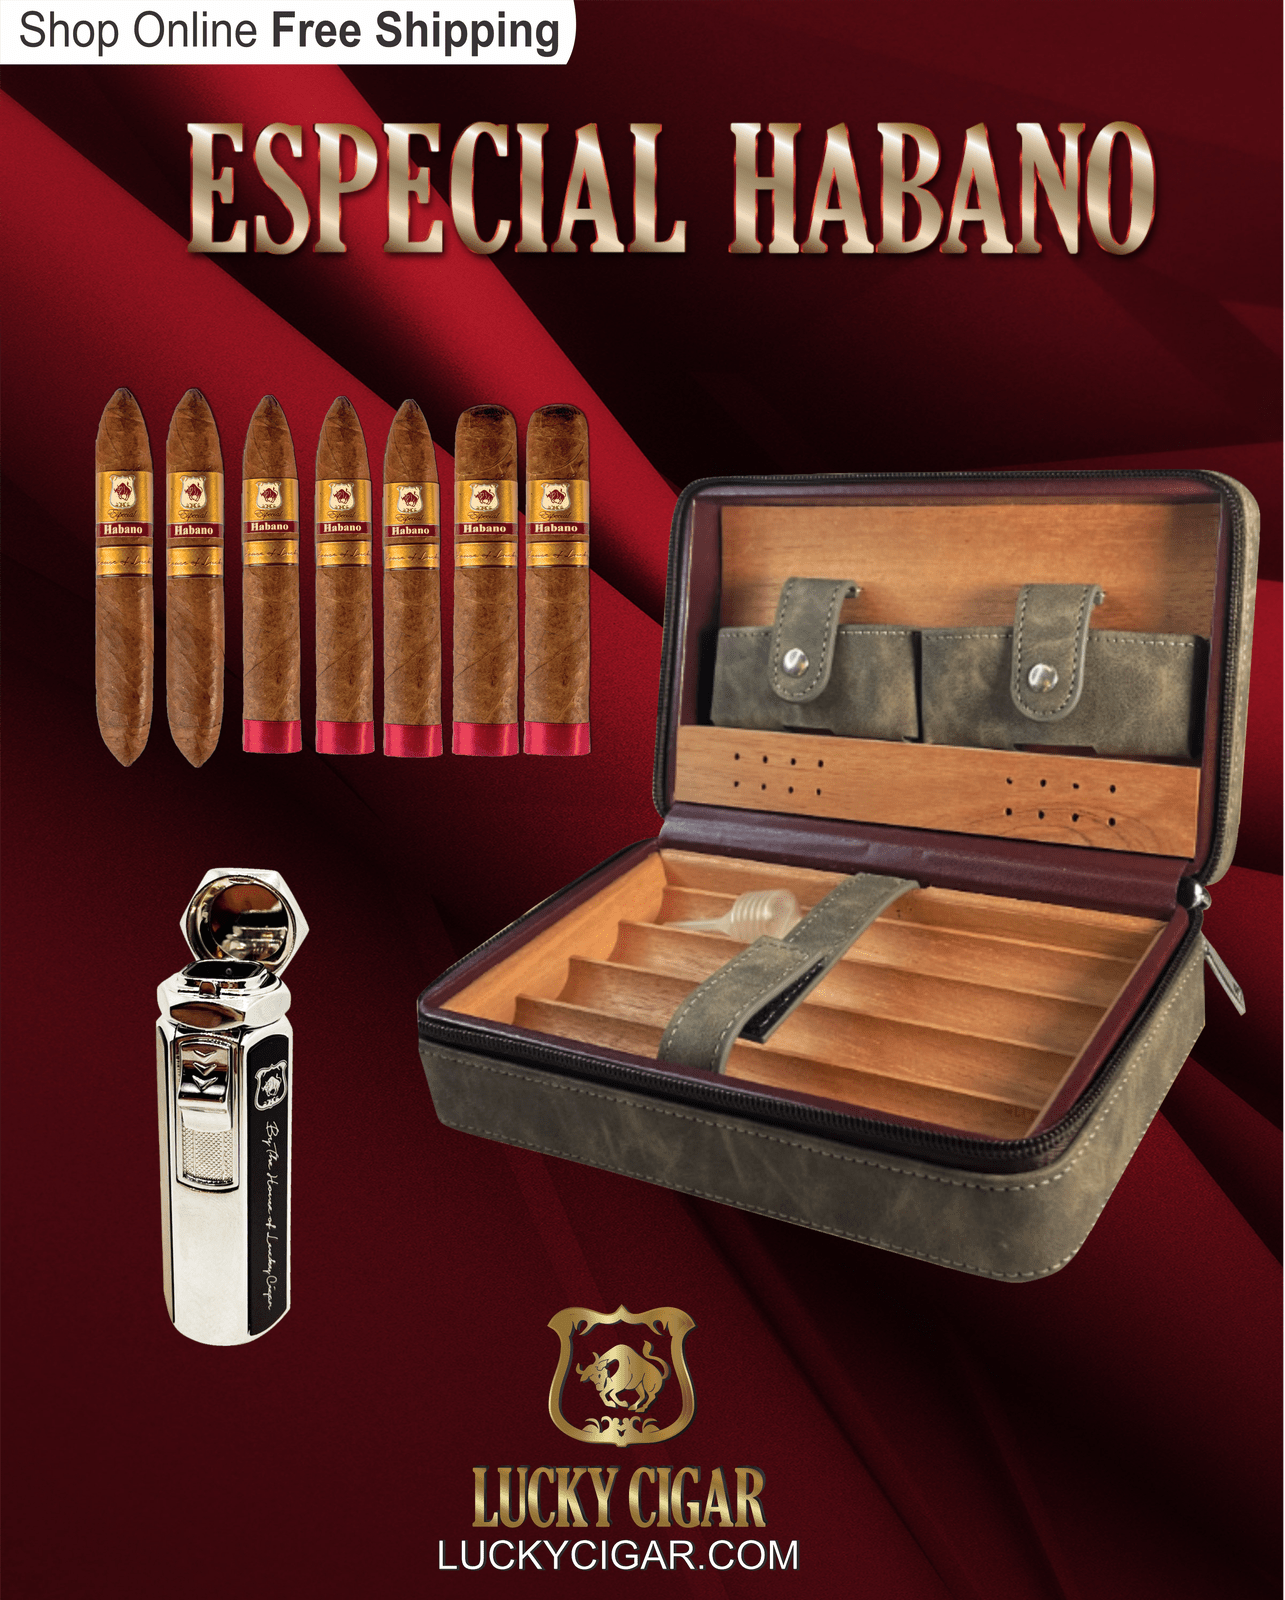 Habano Cigars: Especial Habano by Lucky Cigar: Set of 6 Cigars 2 Toro, 3 Torpedo, 2 Perfecto with Humidor, Torch